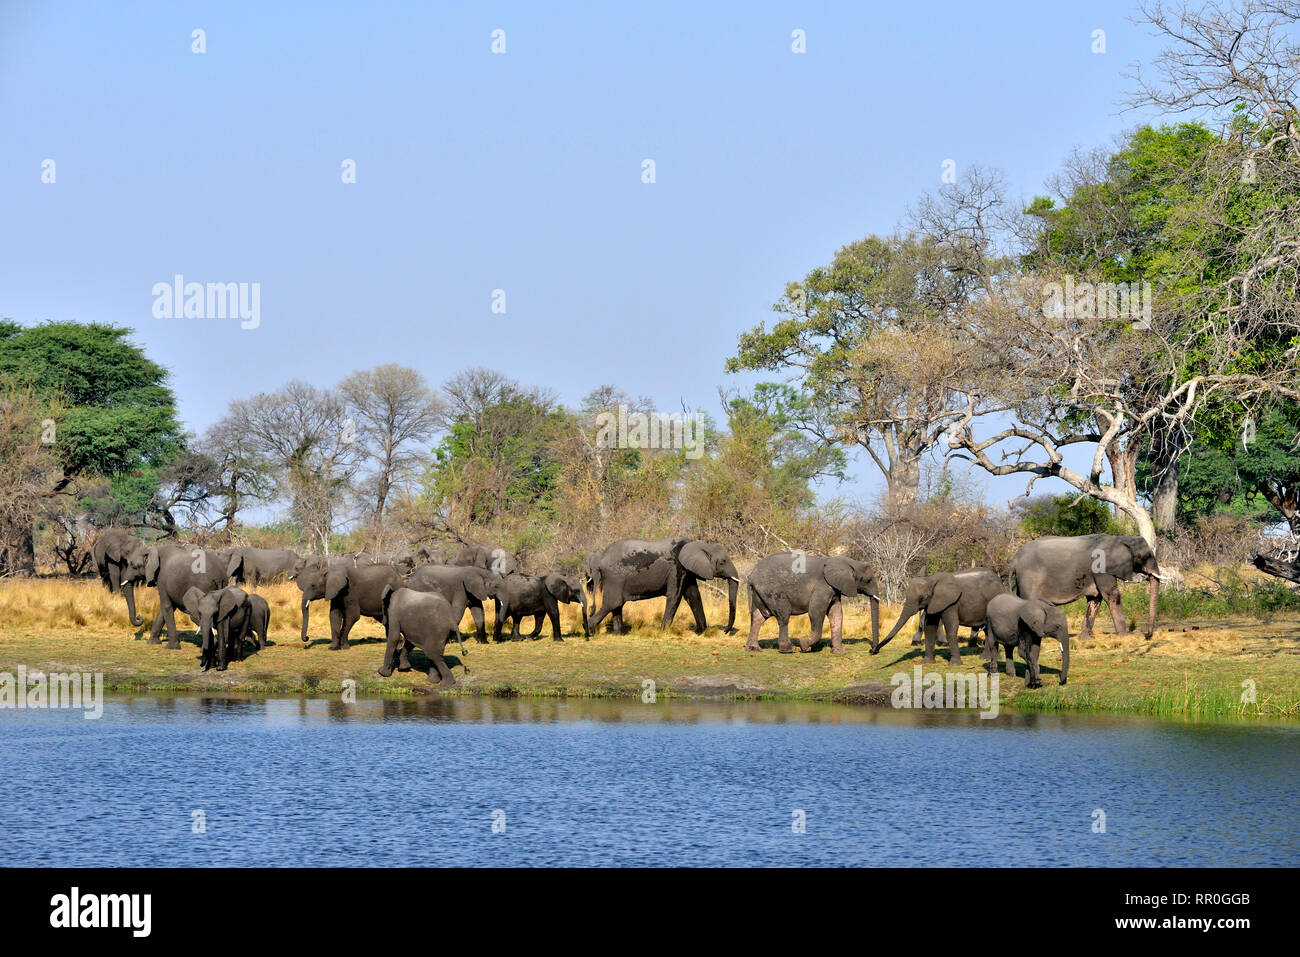 Zoologia, mammifero (mammalia), elefante africano (Loxodonta africana) sul Fiume Cuando, Bwabwata National Park, Additional-Rights-Clearance-Info-Not-Available Foto Stock